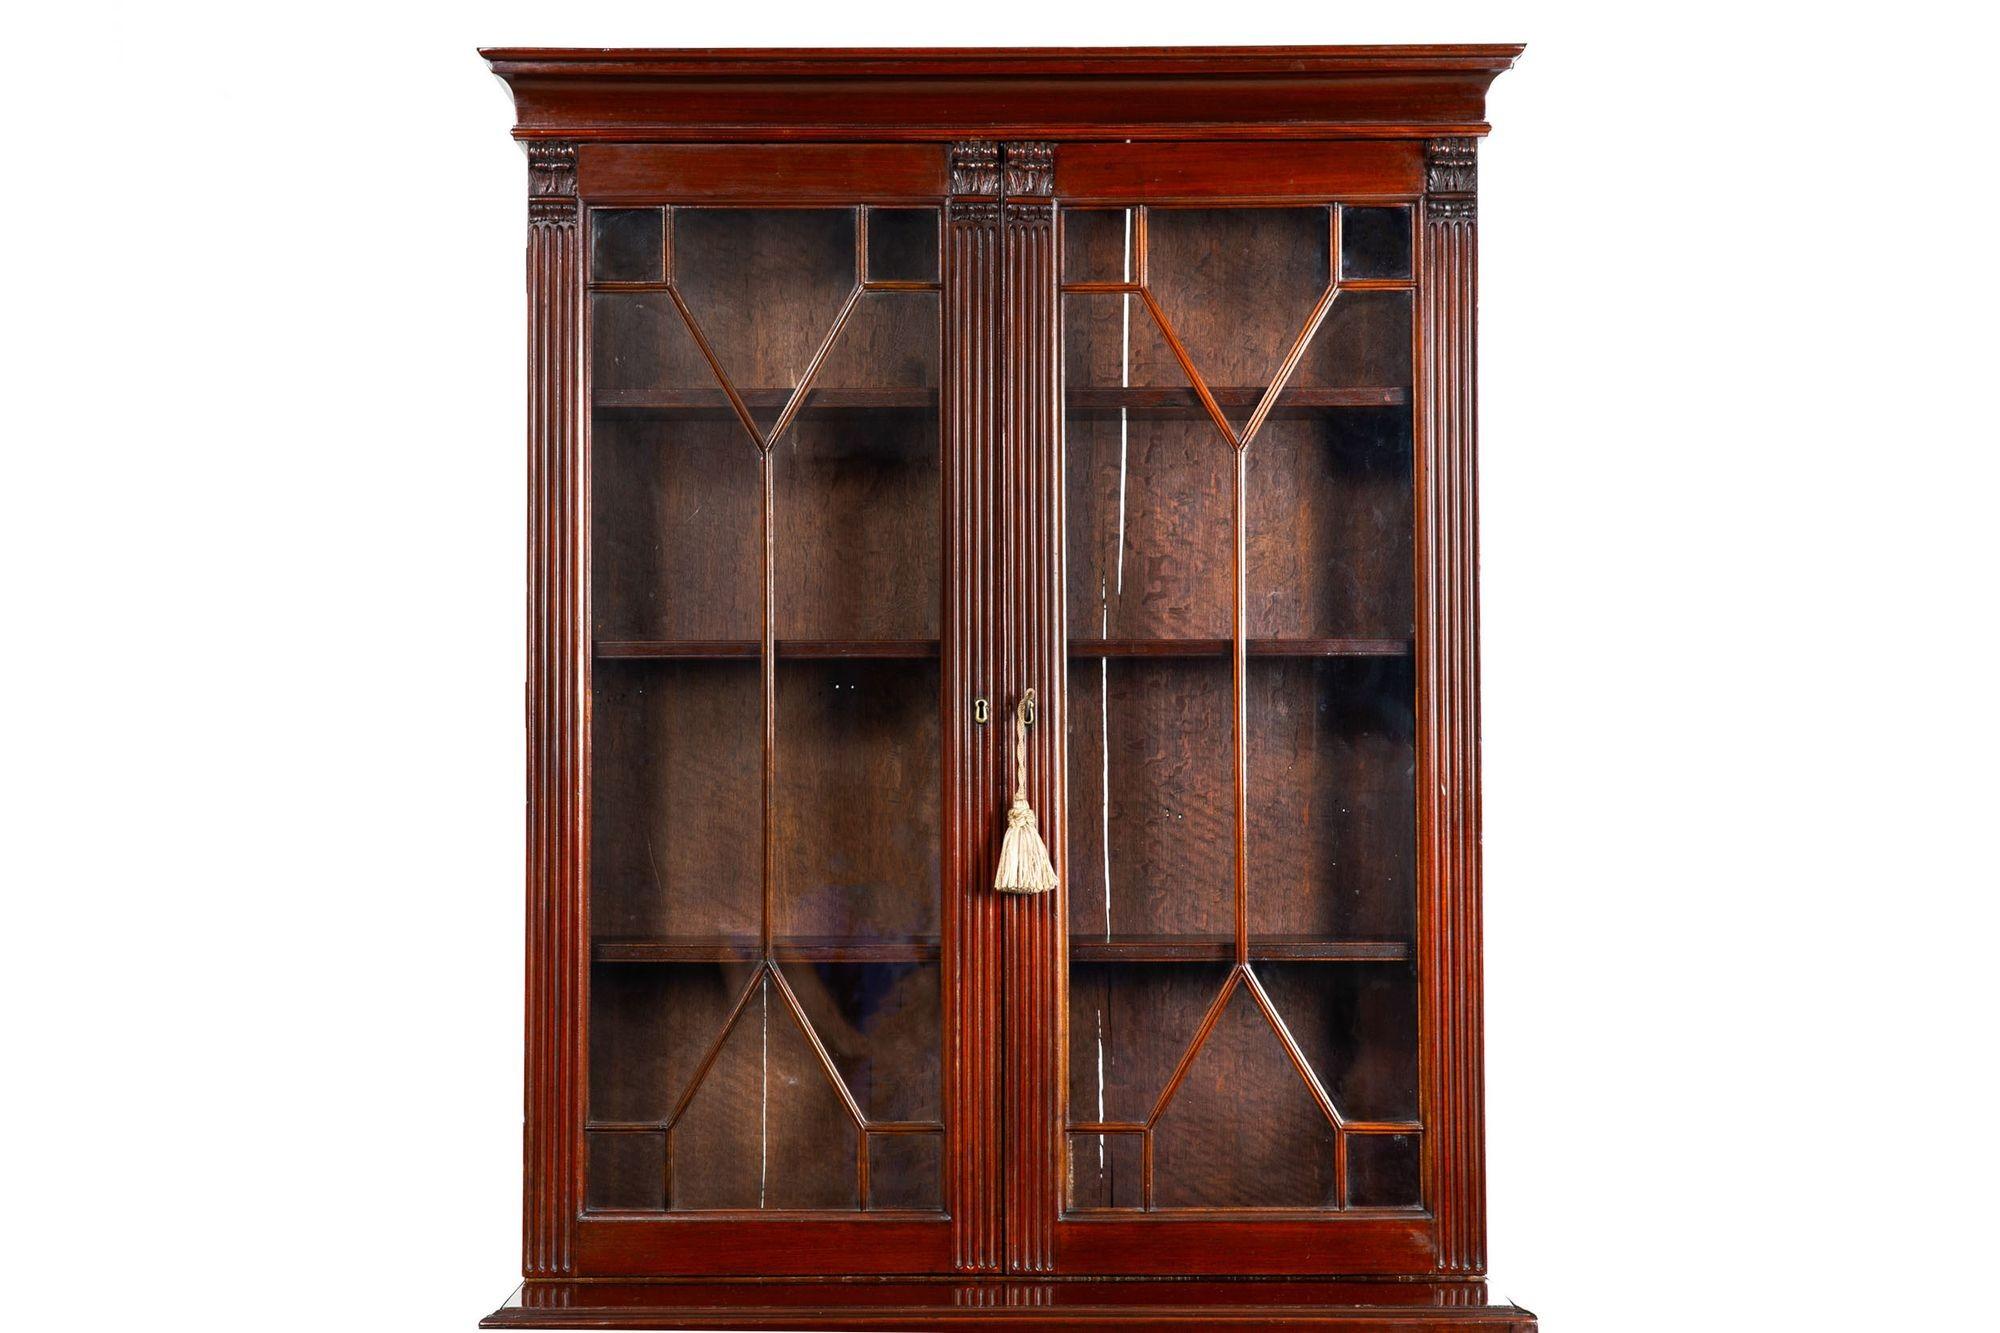 George III English Antique Mahogany Bookcase Secretary Desk circa 1780 (18. Jahrhundert und früher) im Angebot